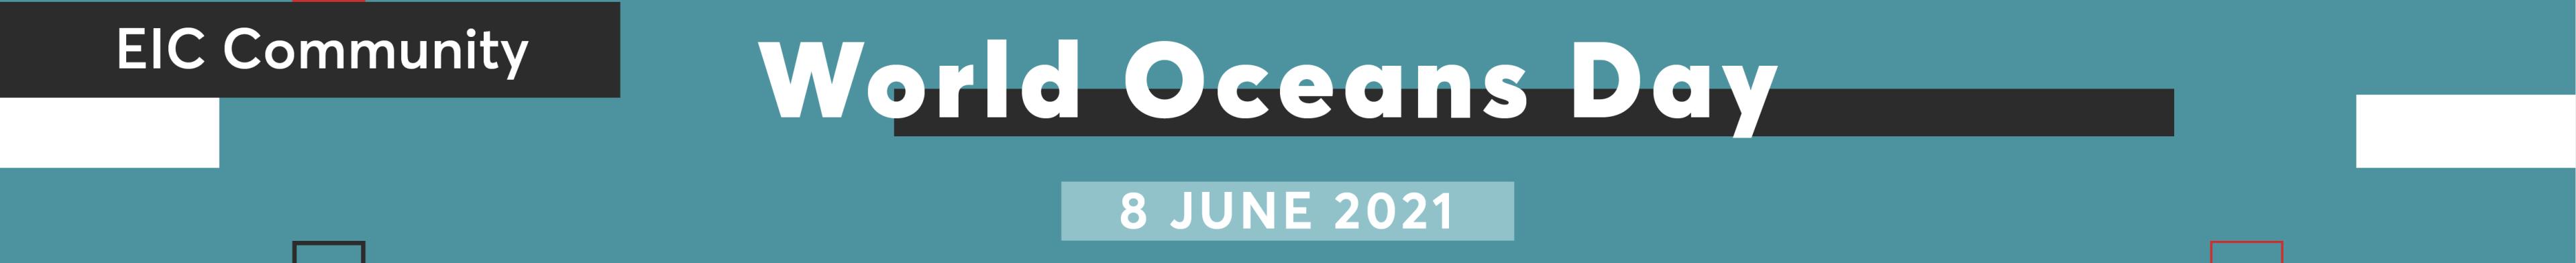 eic_world_ocean_days_community_banner.jpg